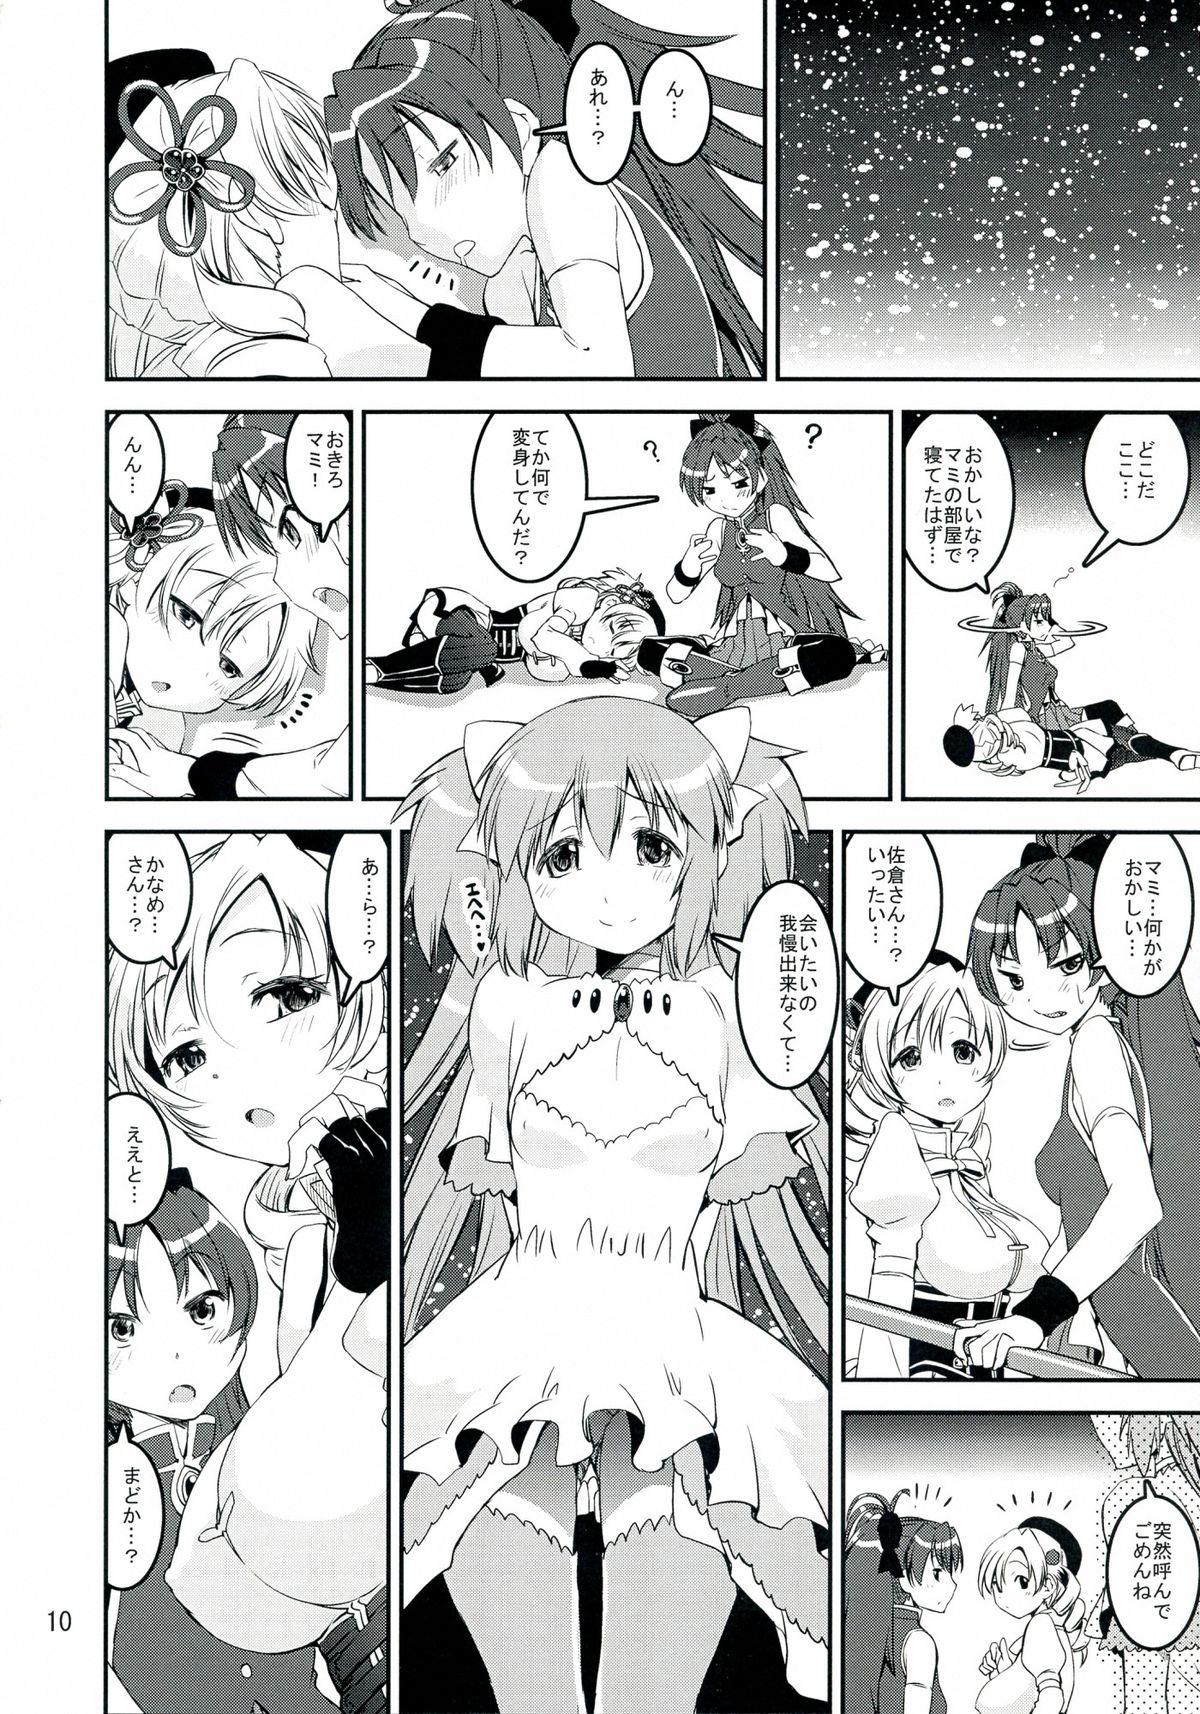 Petite Teen Mami-san do - Puella magi madoka magica Adult Toys - Page 10